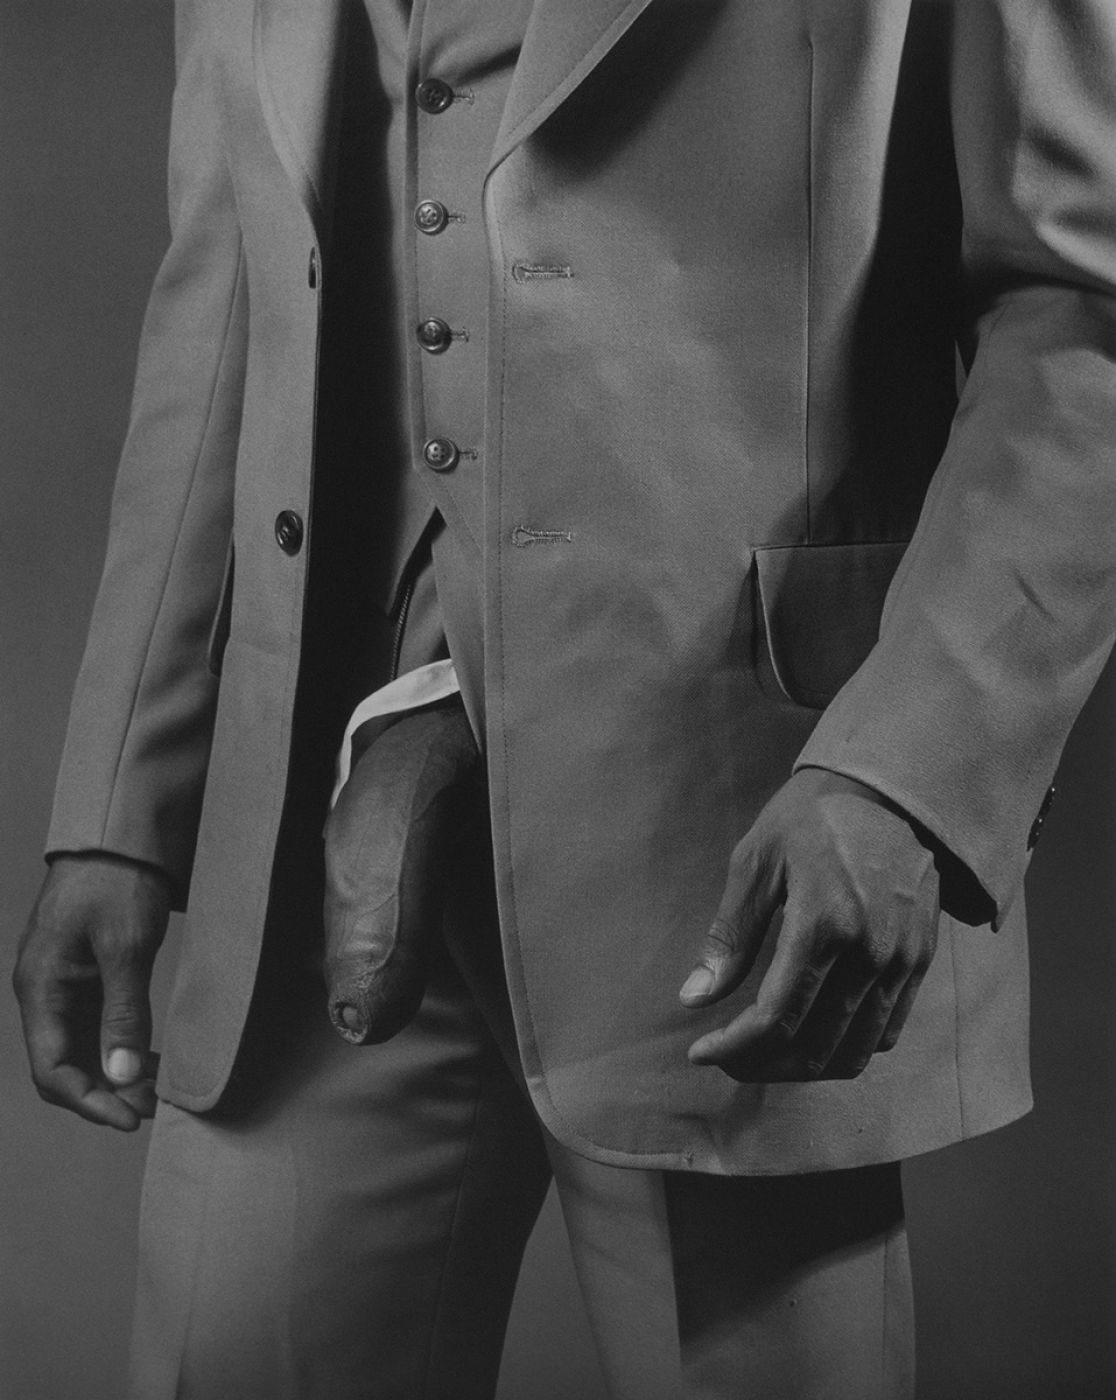 Robert Mapplethorpe, “Man in polyester suit”, 1980